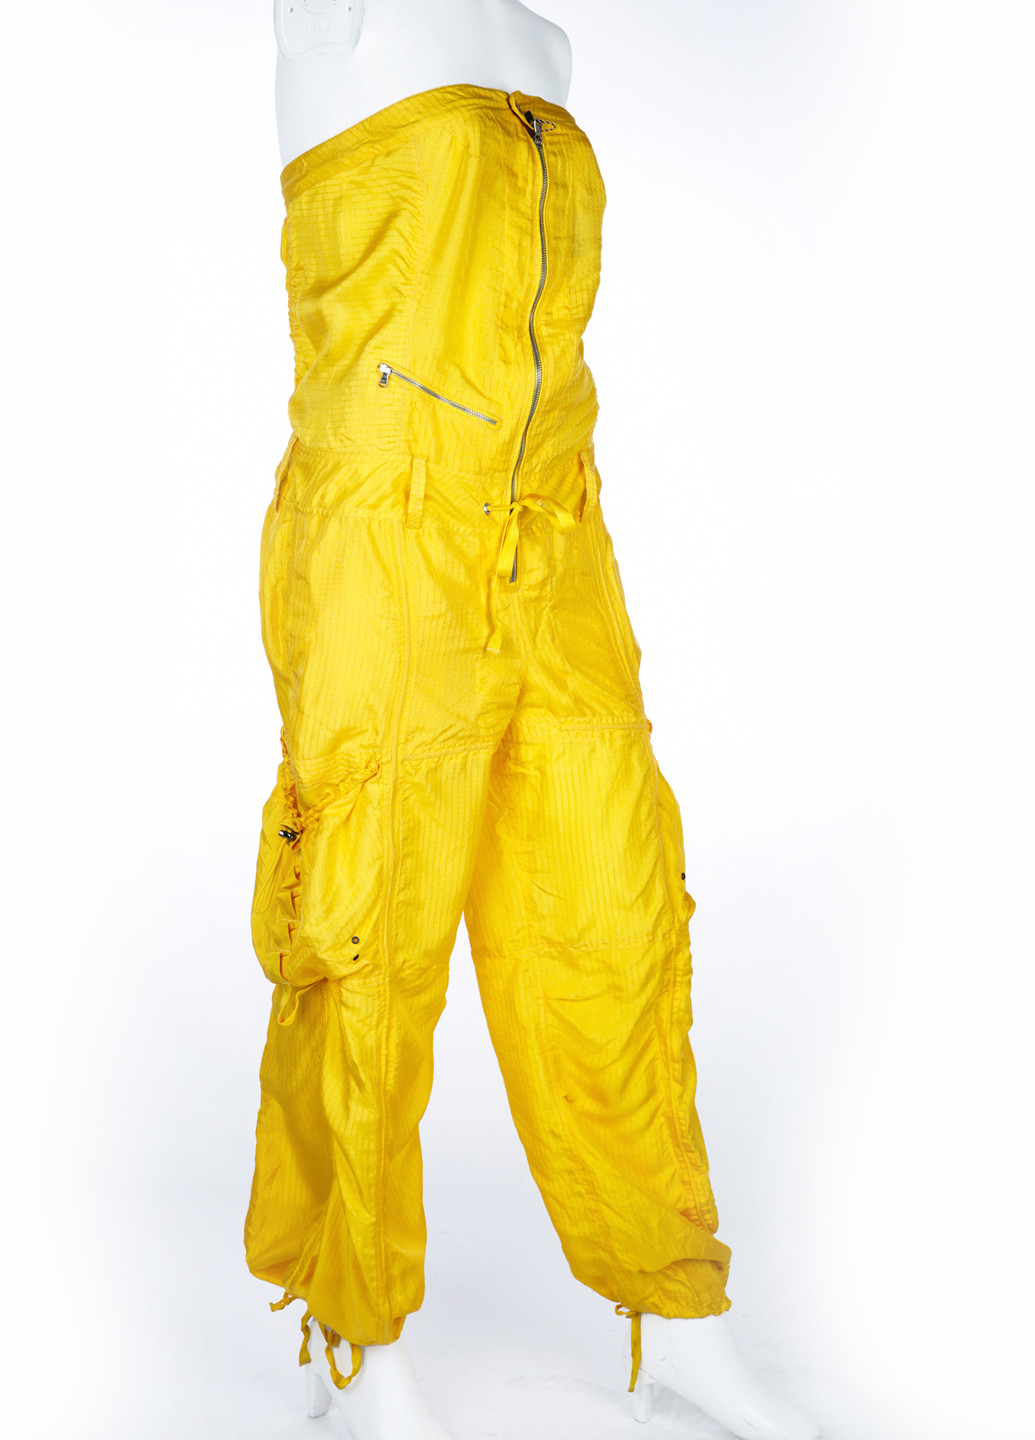 Комбинезон Ralph Lauren комбинезон-брюки однотонный жёлтый кэжуал полиэстер